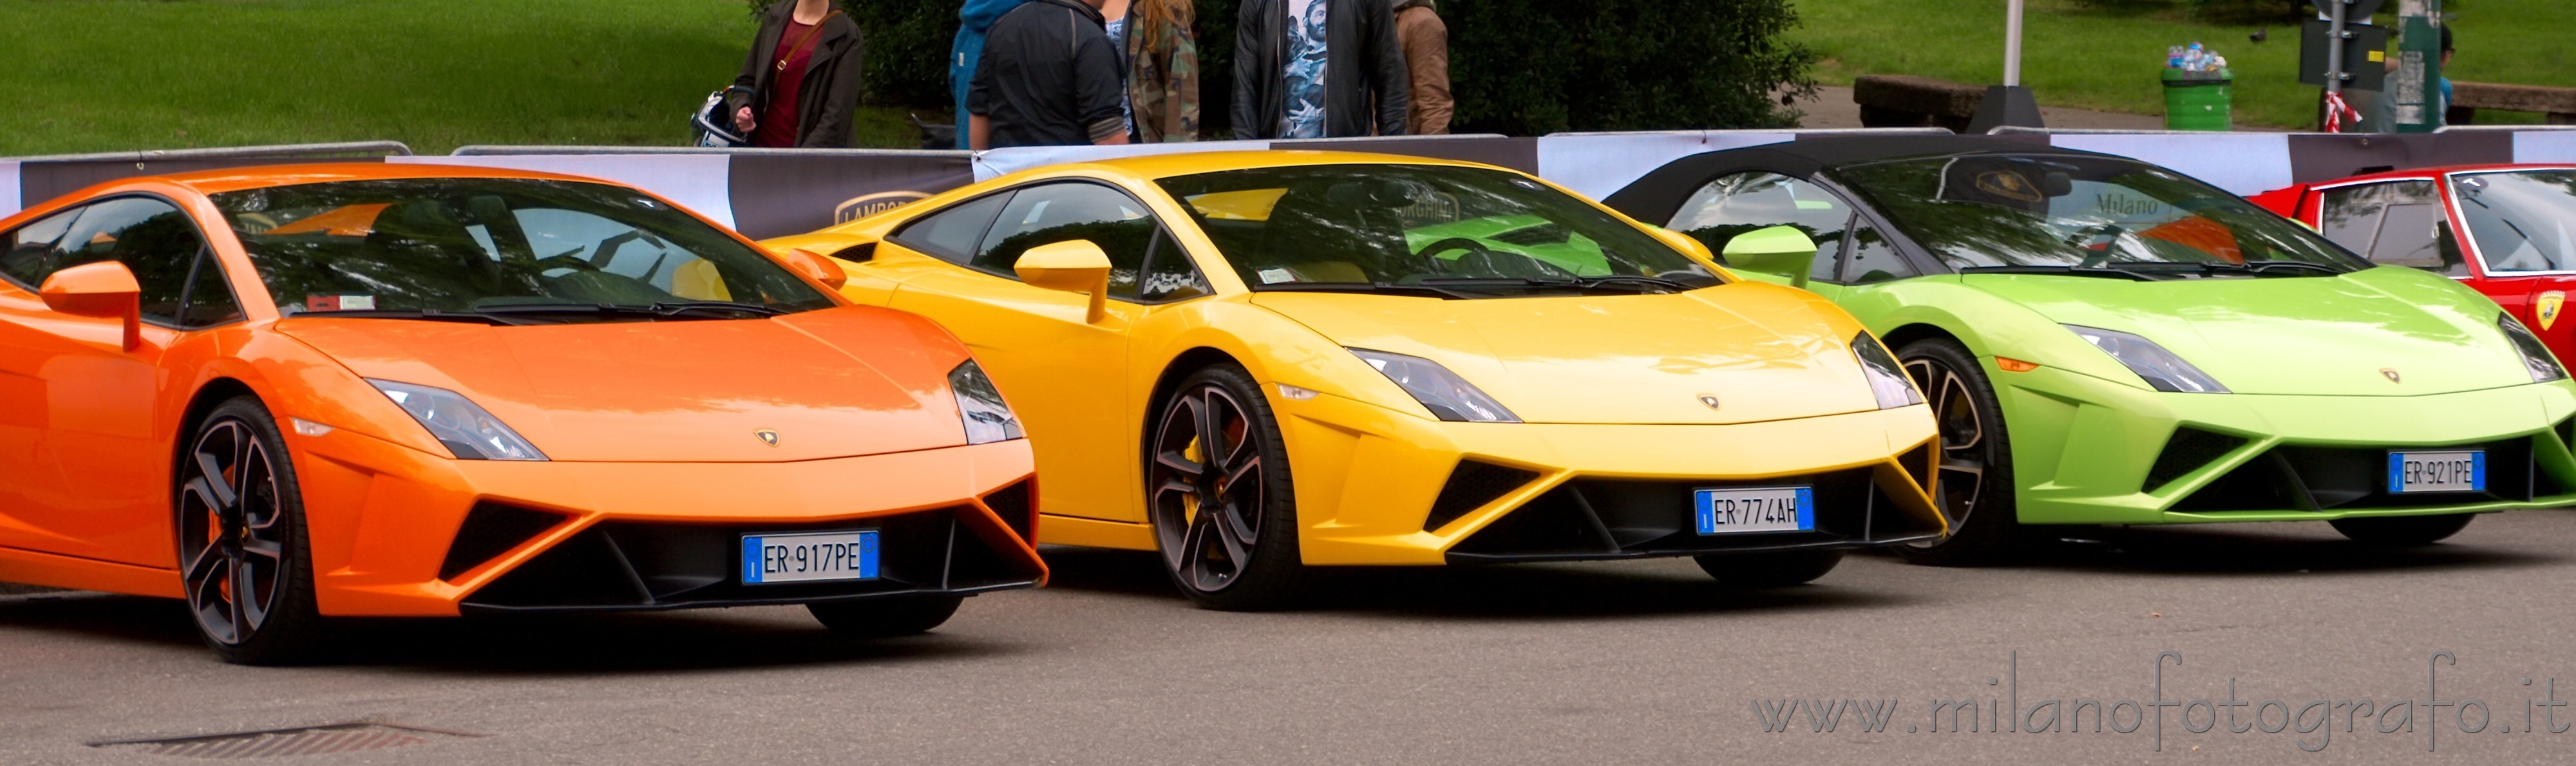 Milan (Italy): Lamborghini in many colors at the meeting at the Castello Sforzesco - Milan (Italy)